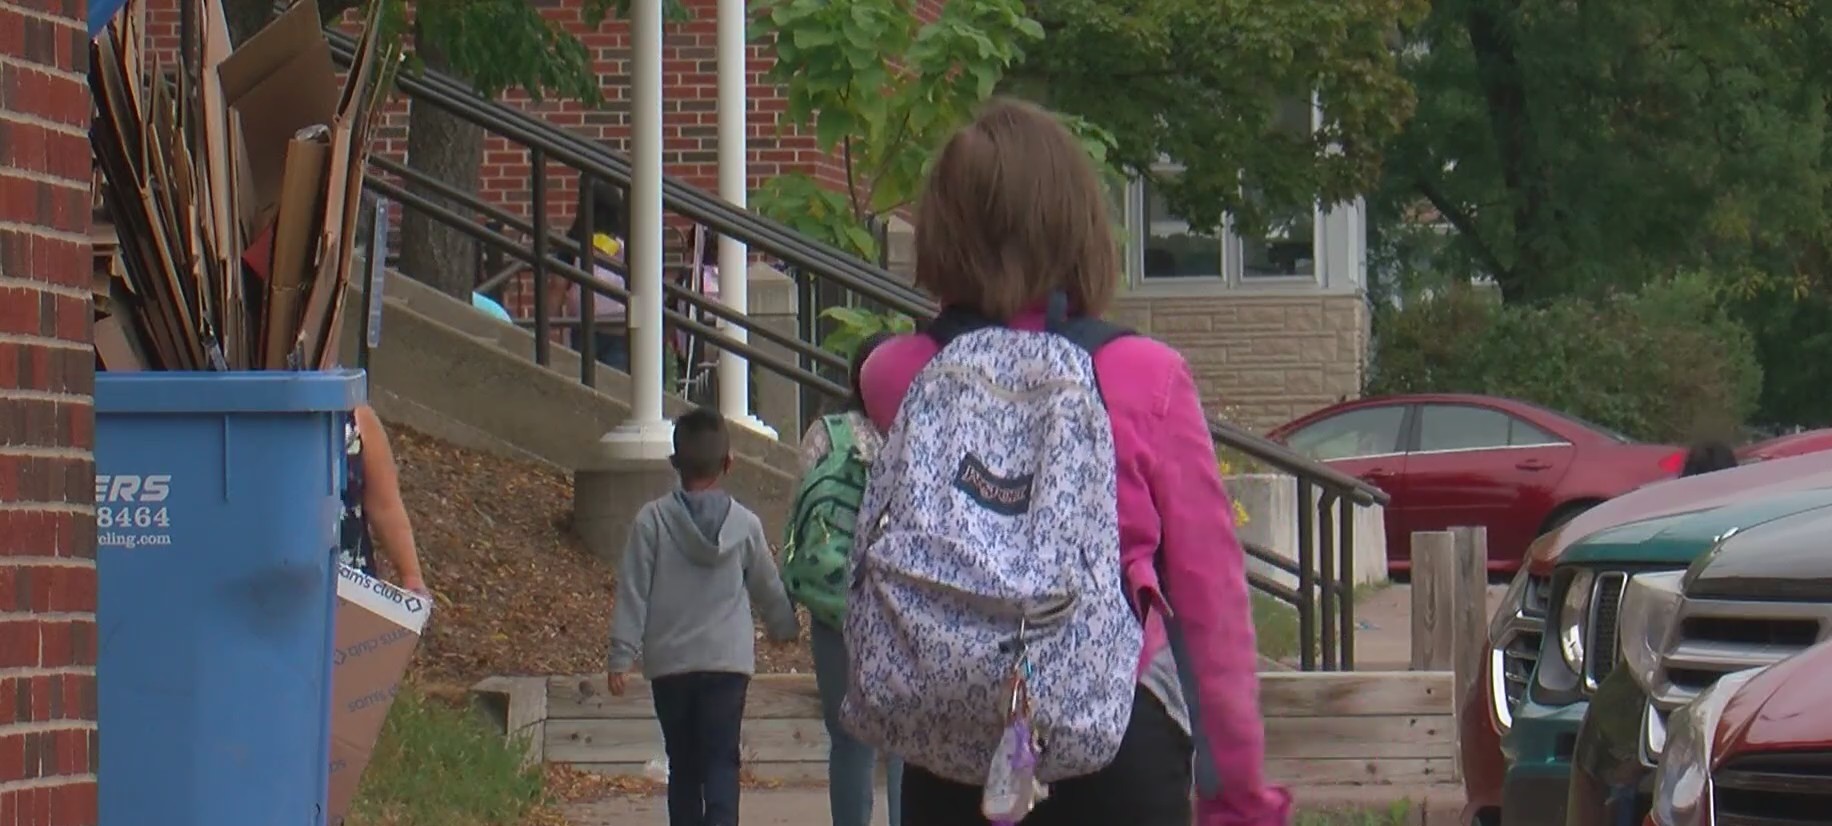 St. Paul Schools Considering Closing 5 Schools Due To Falling Enrollment